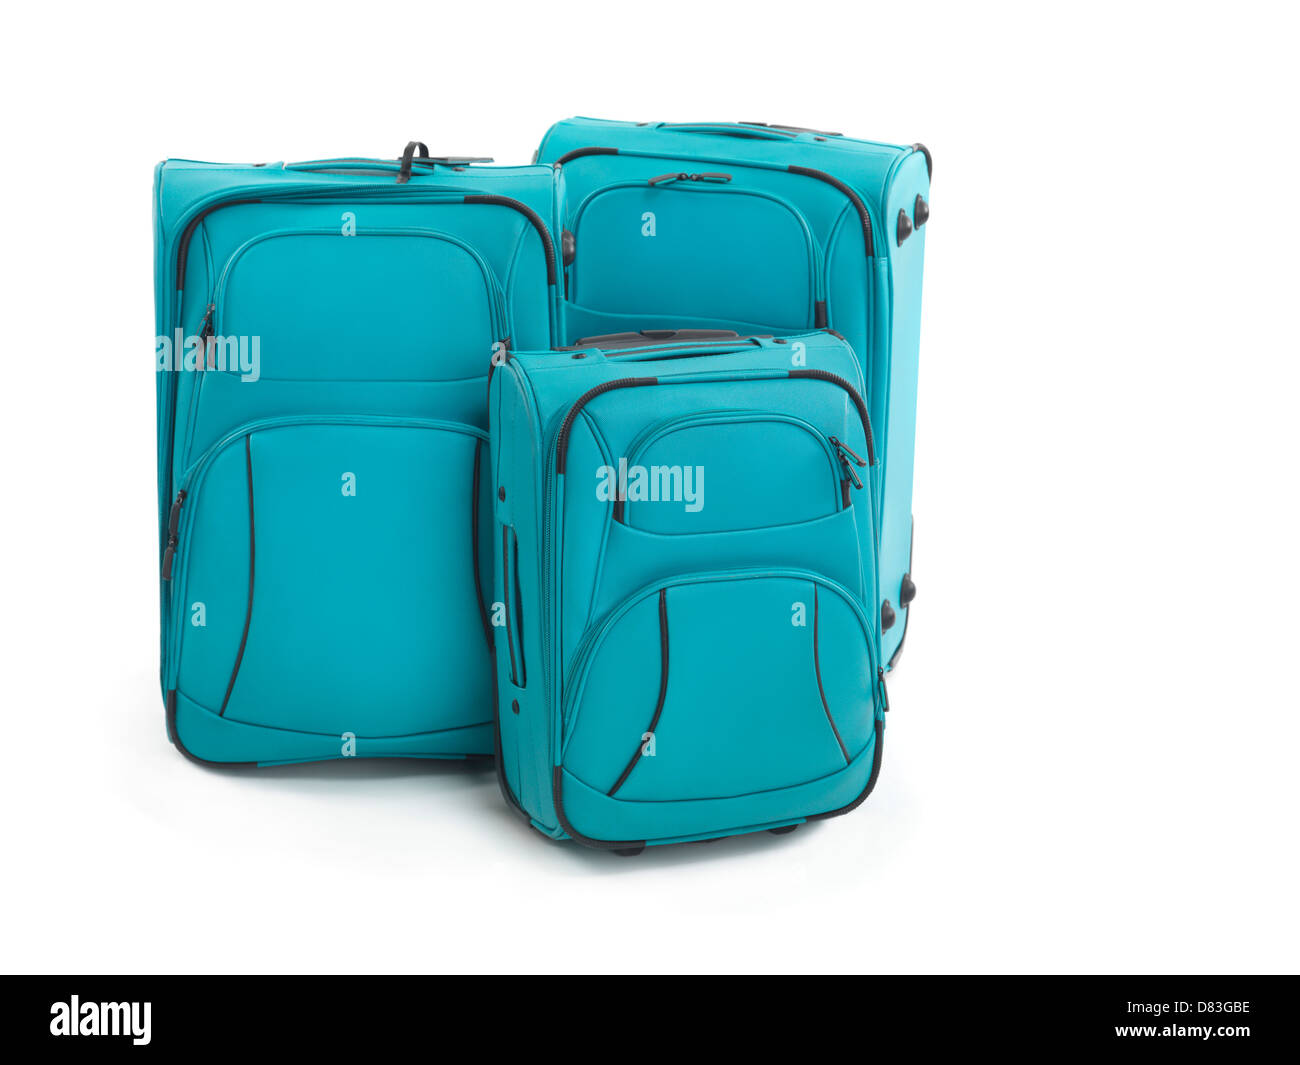 Three blue suitcases isolated on white background Stock Photo